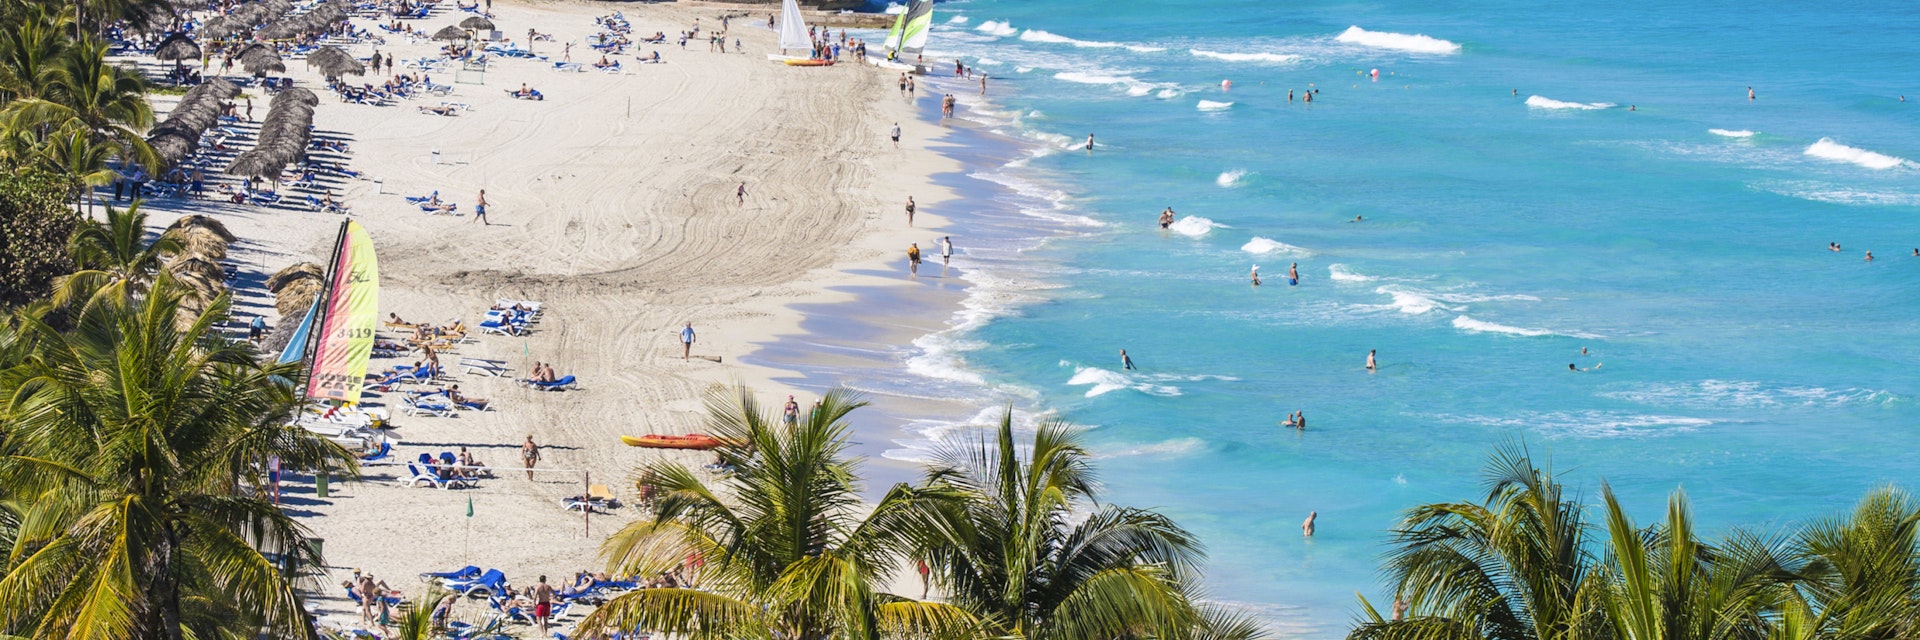 Cuba, Varadero, View over Varadero beach towards Xanadu mansion